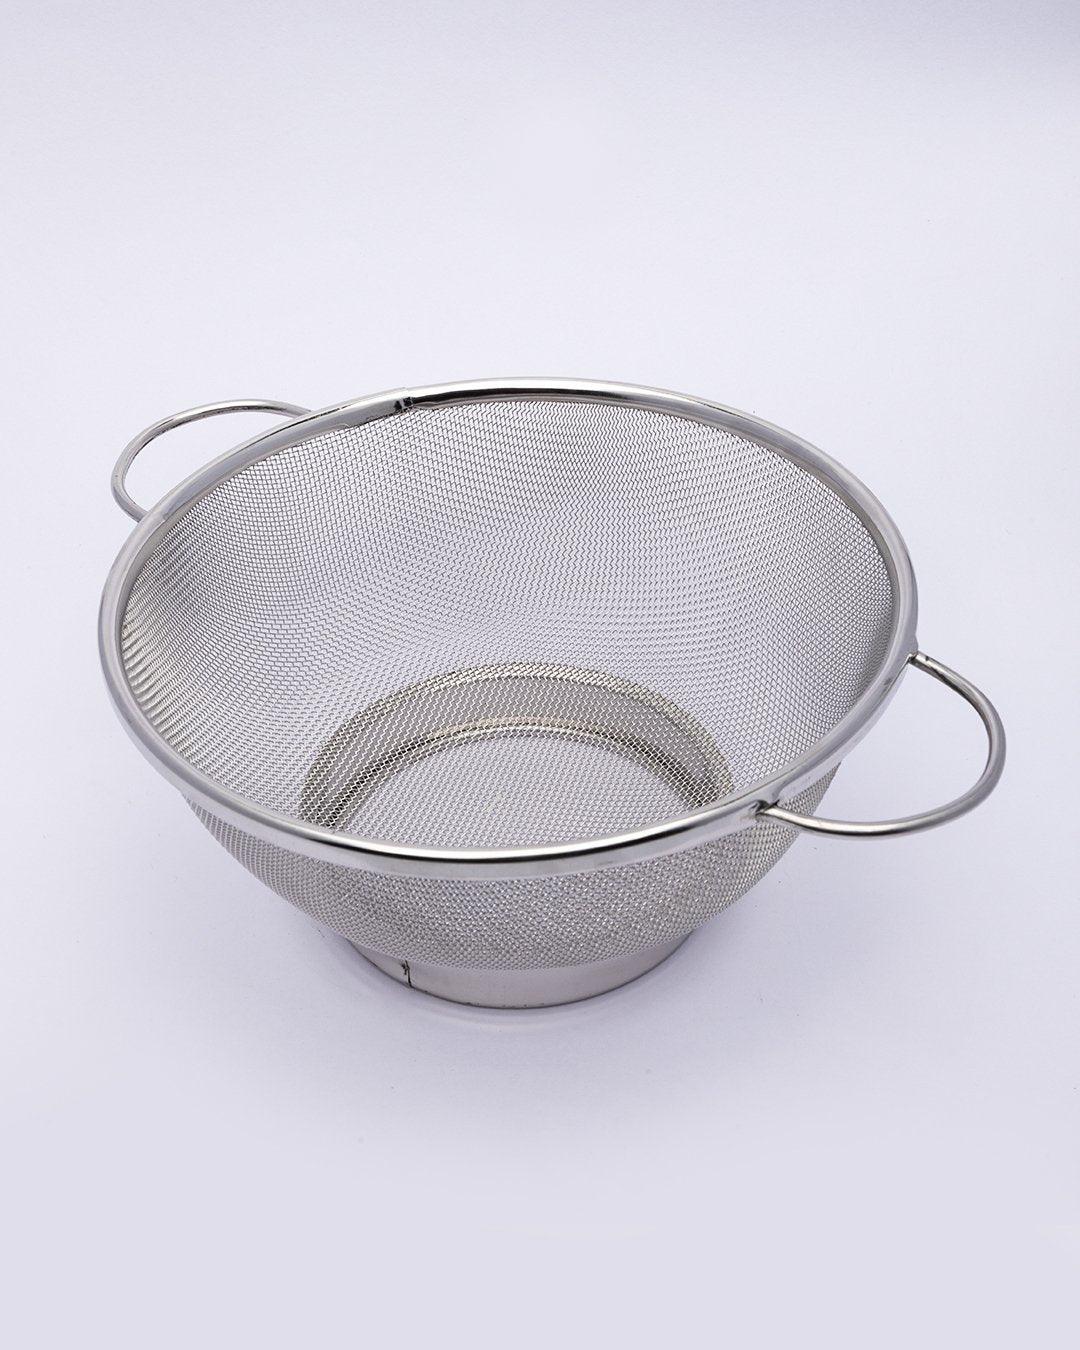 Colander Basket, Silver, Stainless Steel - MARKET 99